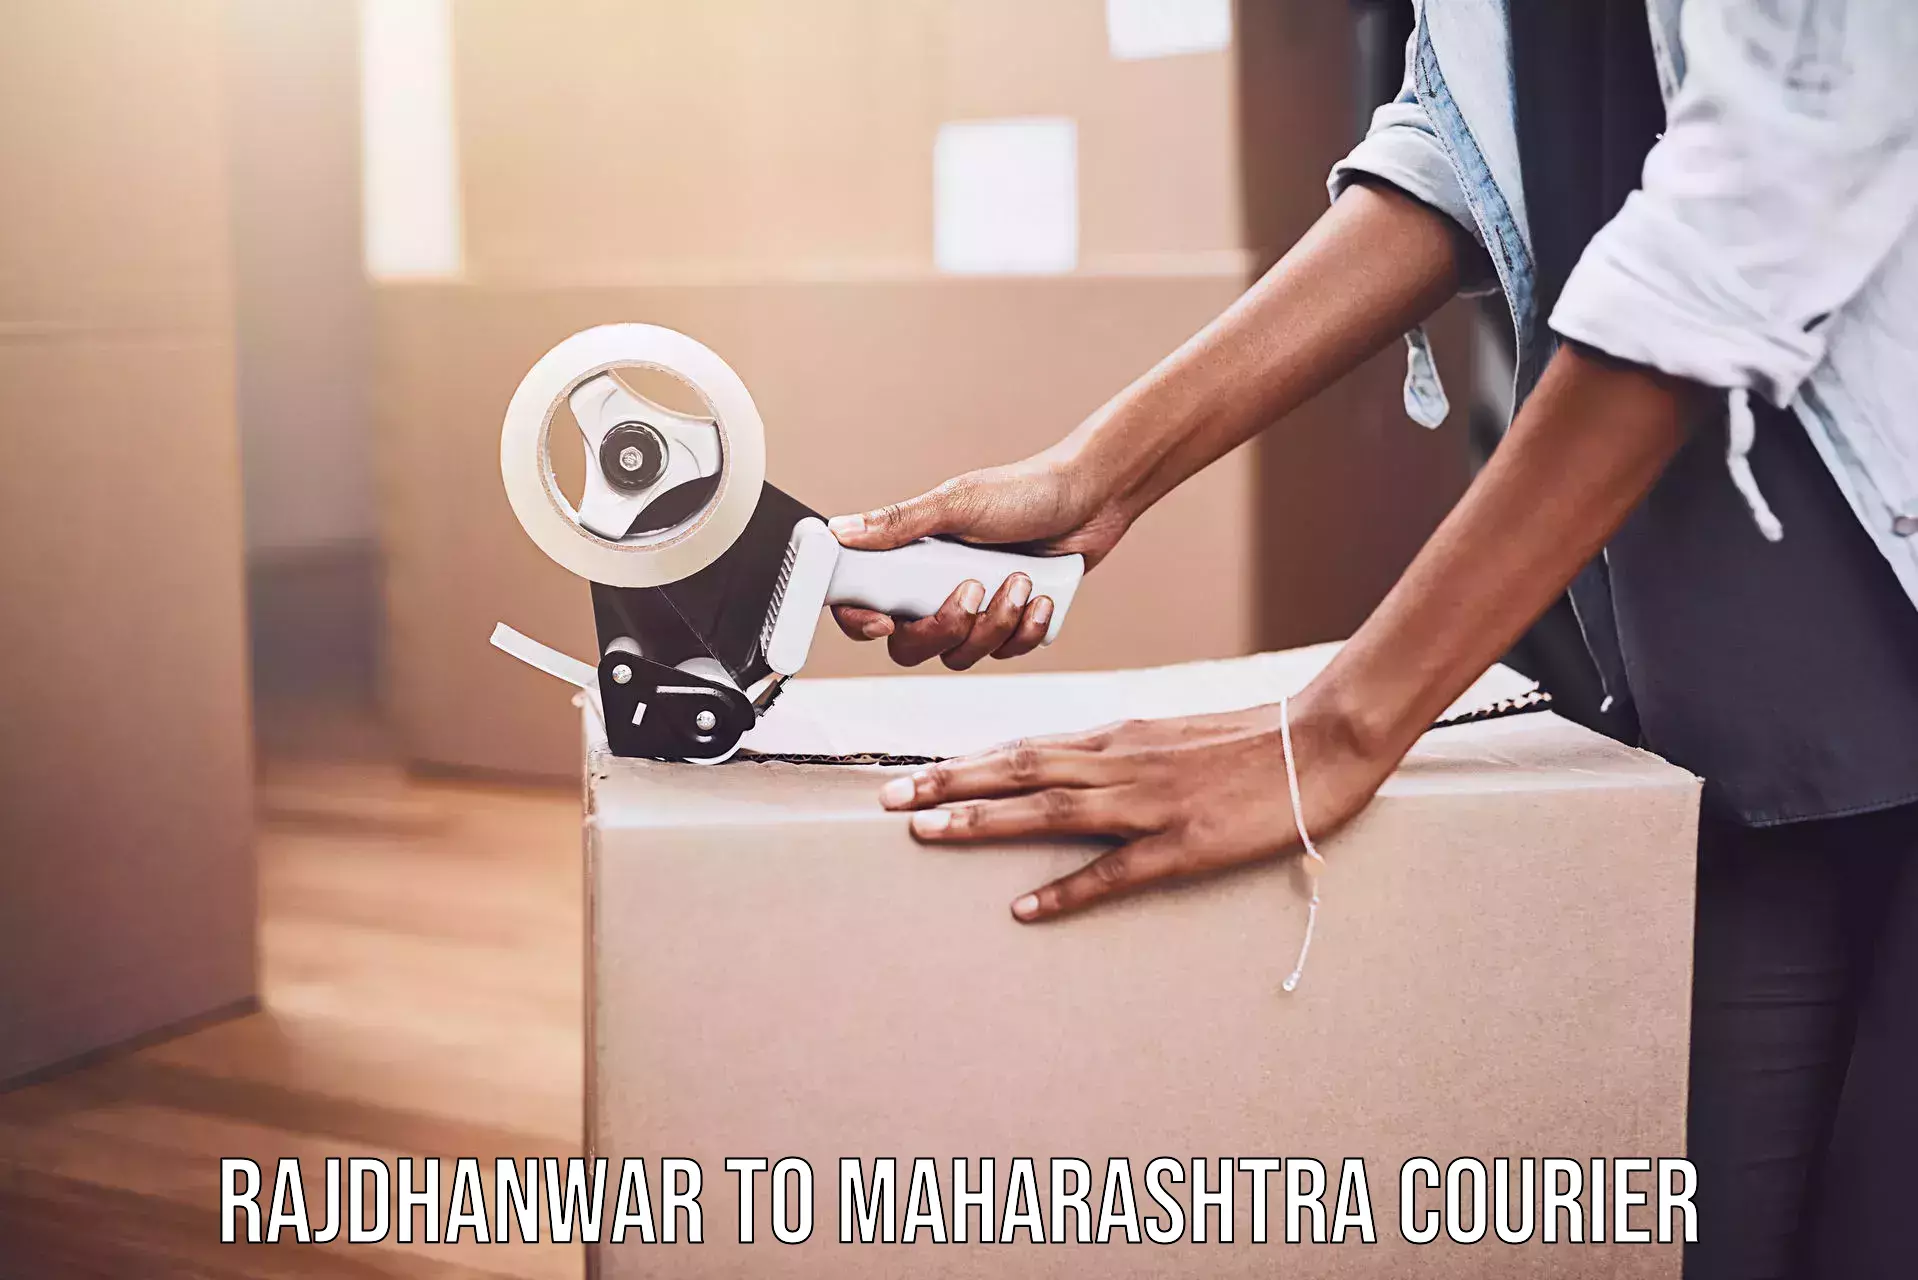 Courier service partnerships in Rajdhanwar to Maharashtra